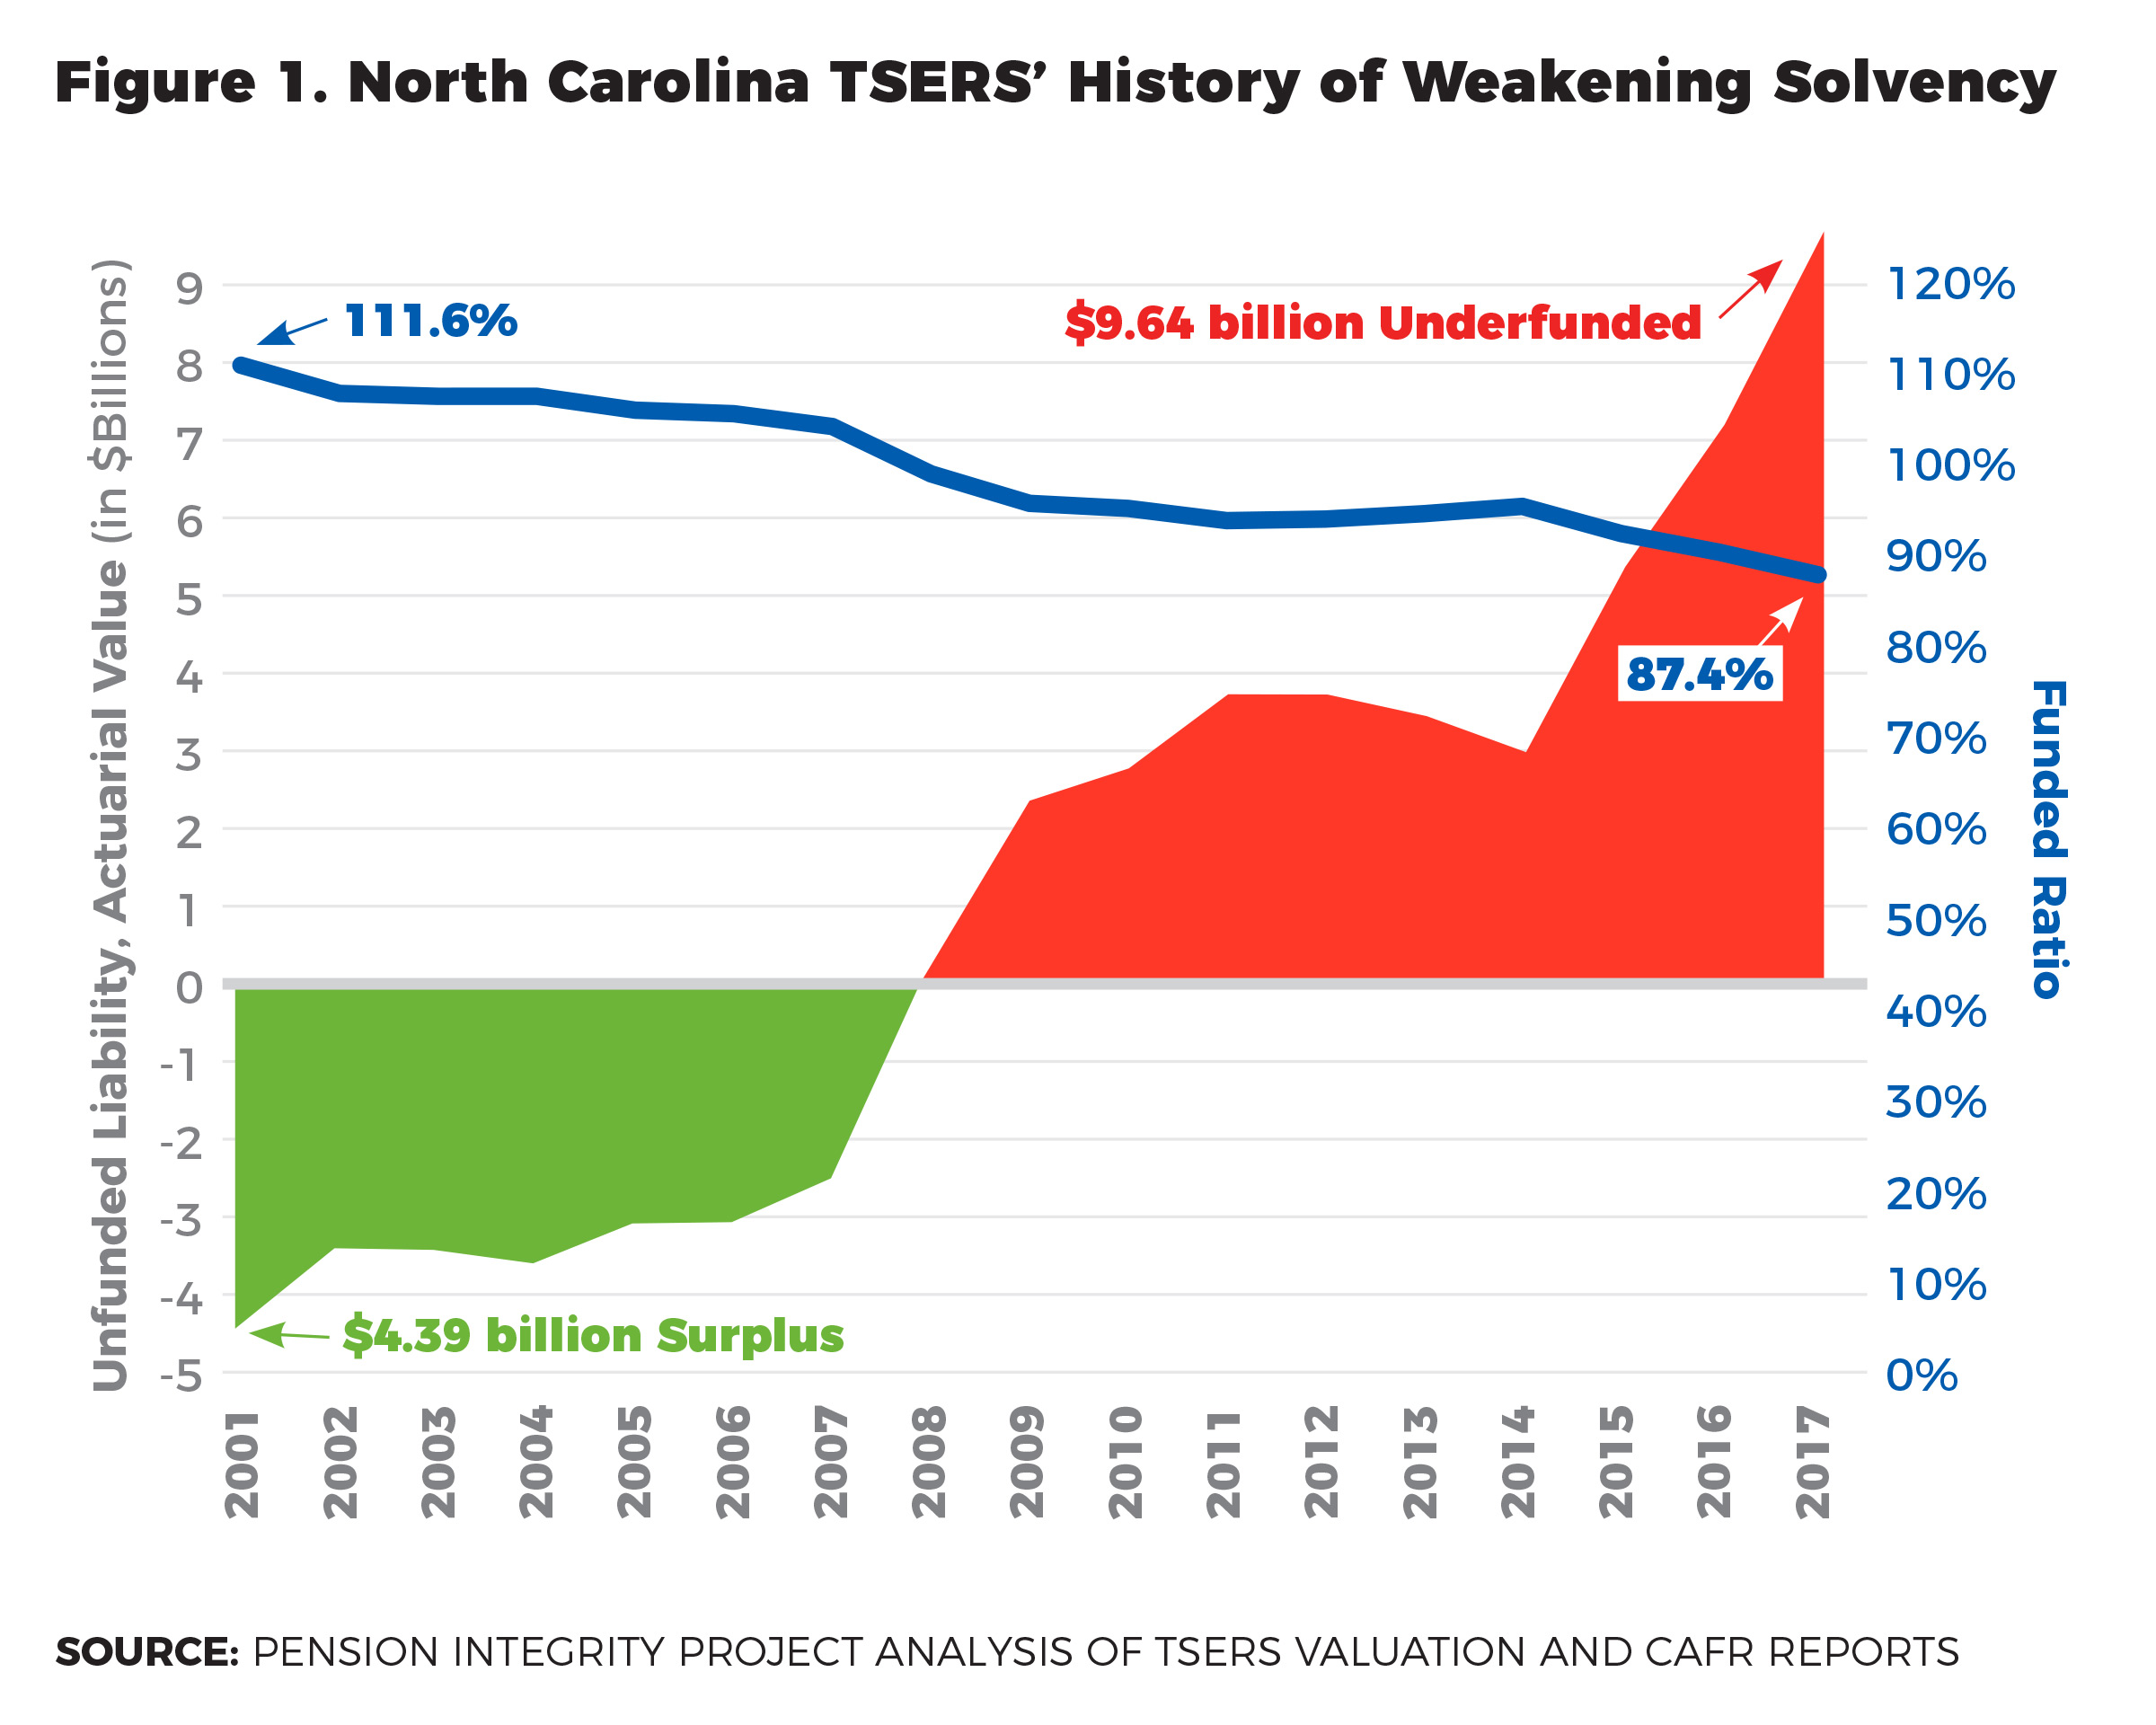 North Carolina TSERS’ History of Weakening Solvency